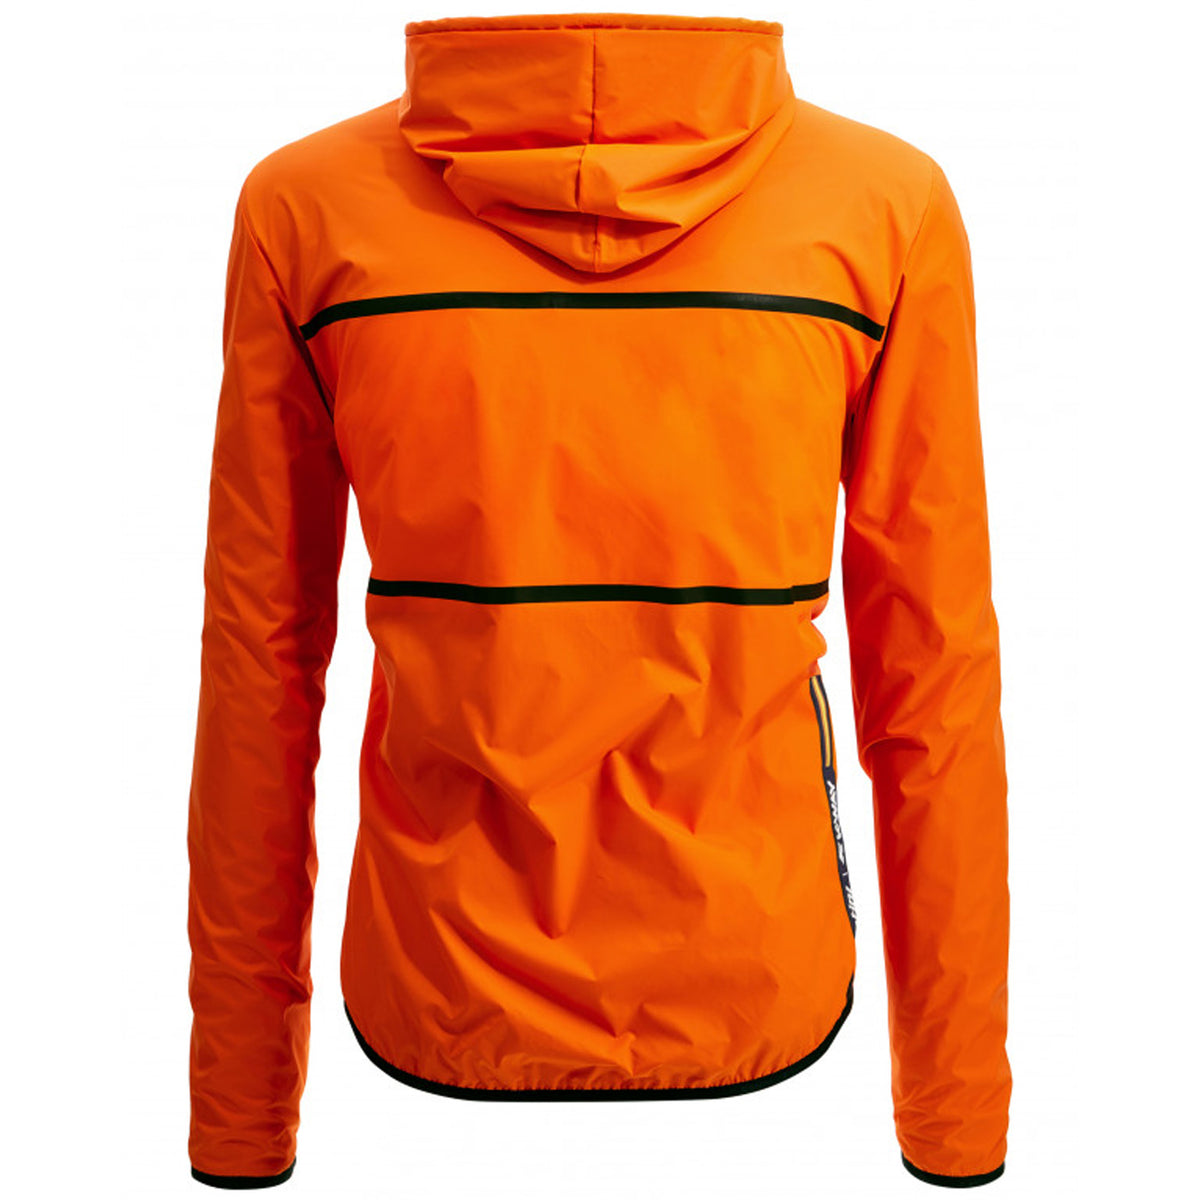 Santini X K Way Reversible Windproof Jacket Orange All4cycling 9489